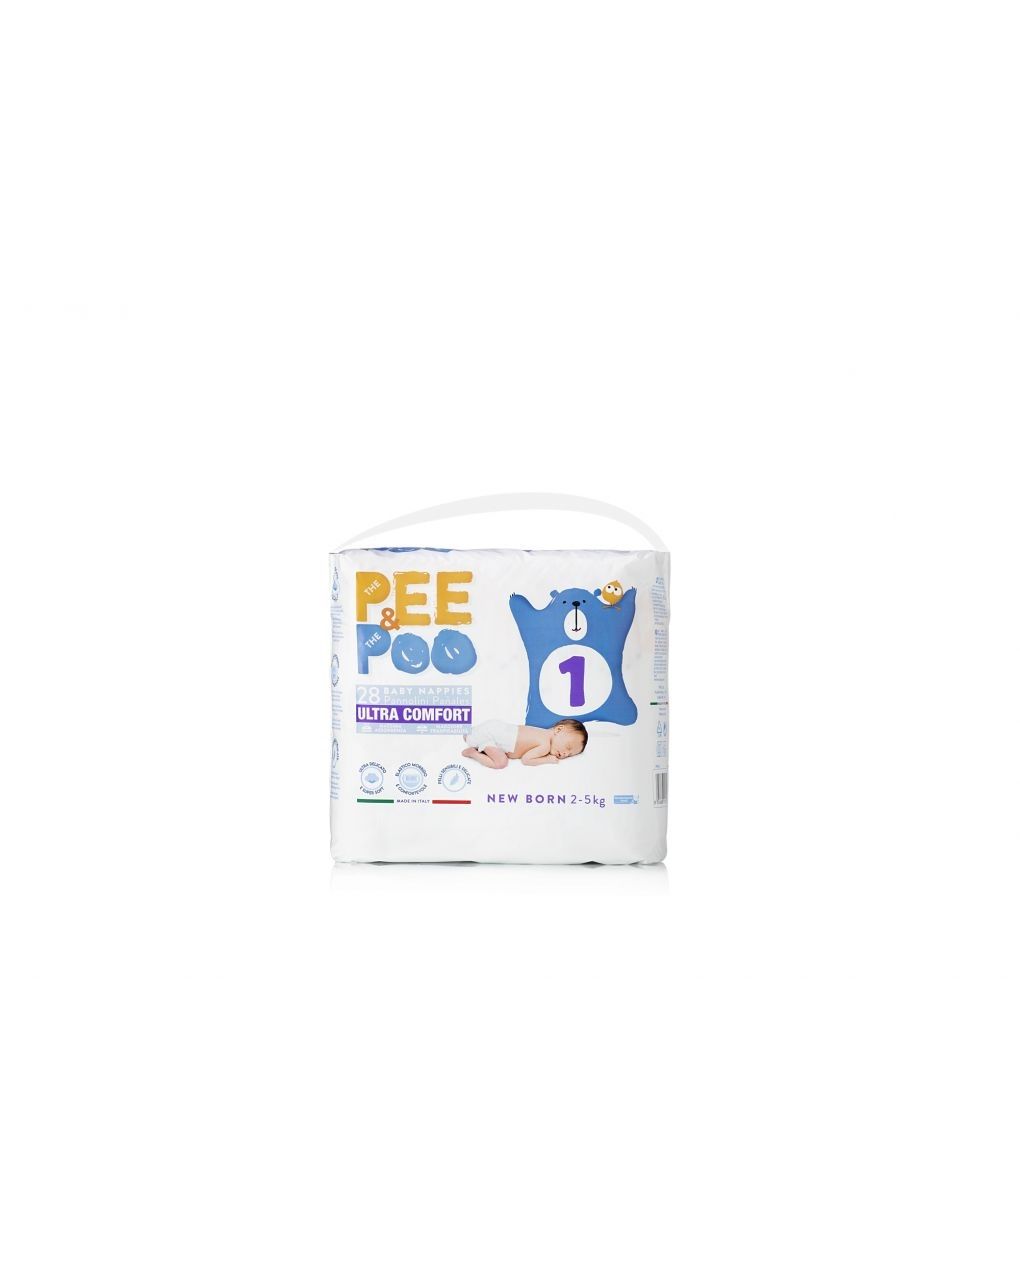 Pee&poo - recém-nascido tg 1 28 pz - The Pee &amp; The Poo